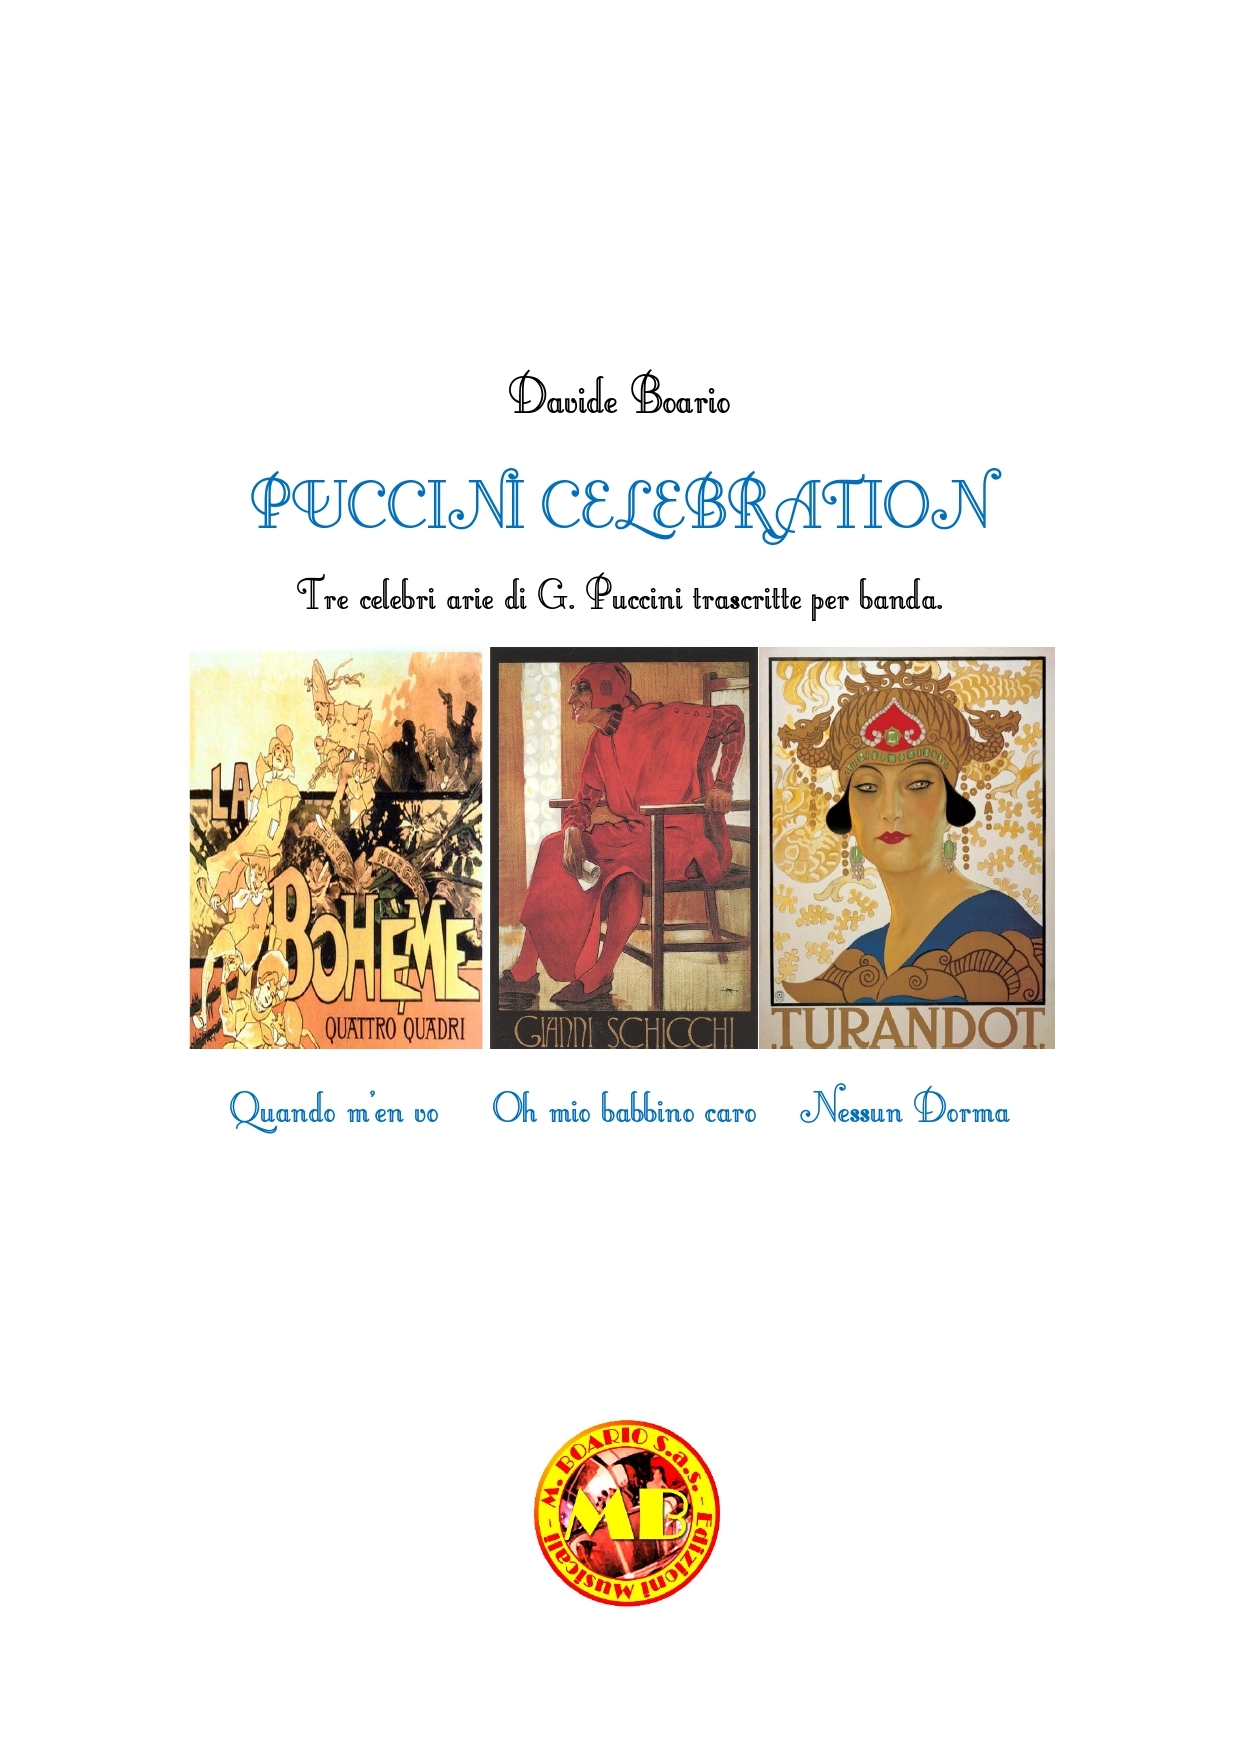 Copertina_Puccini_Celebration2_page-0001